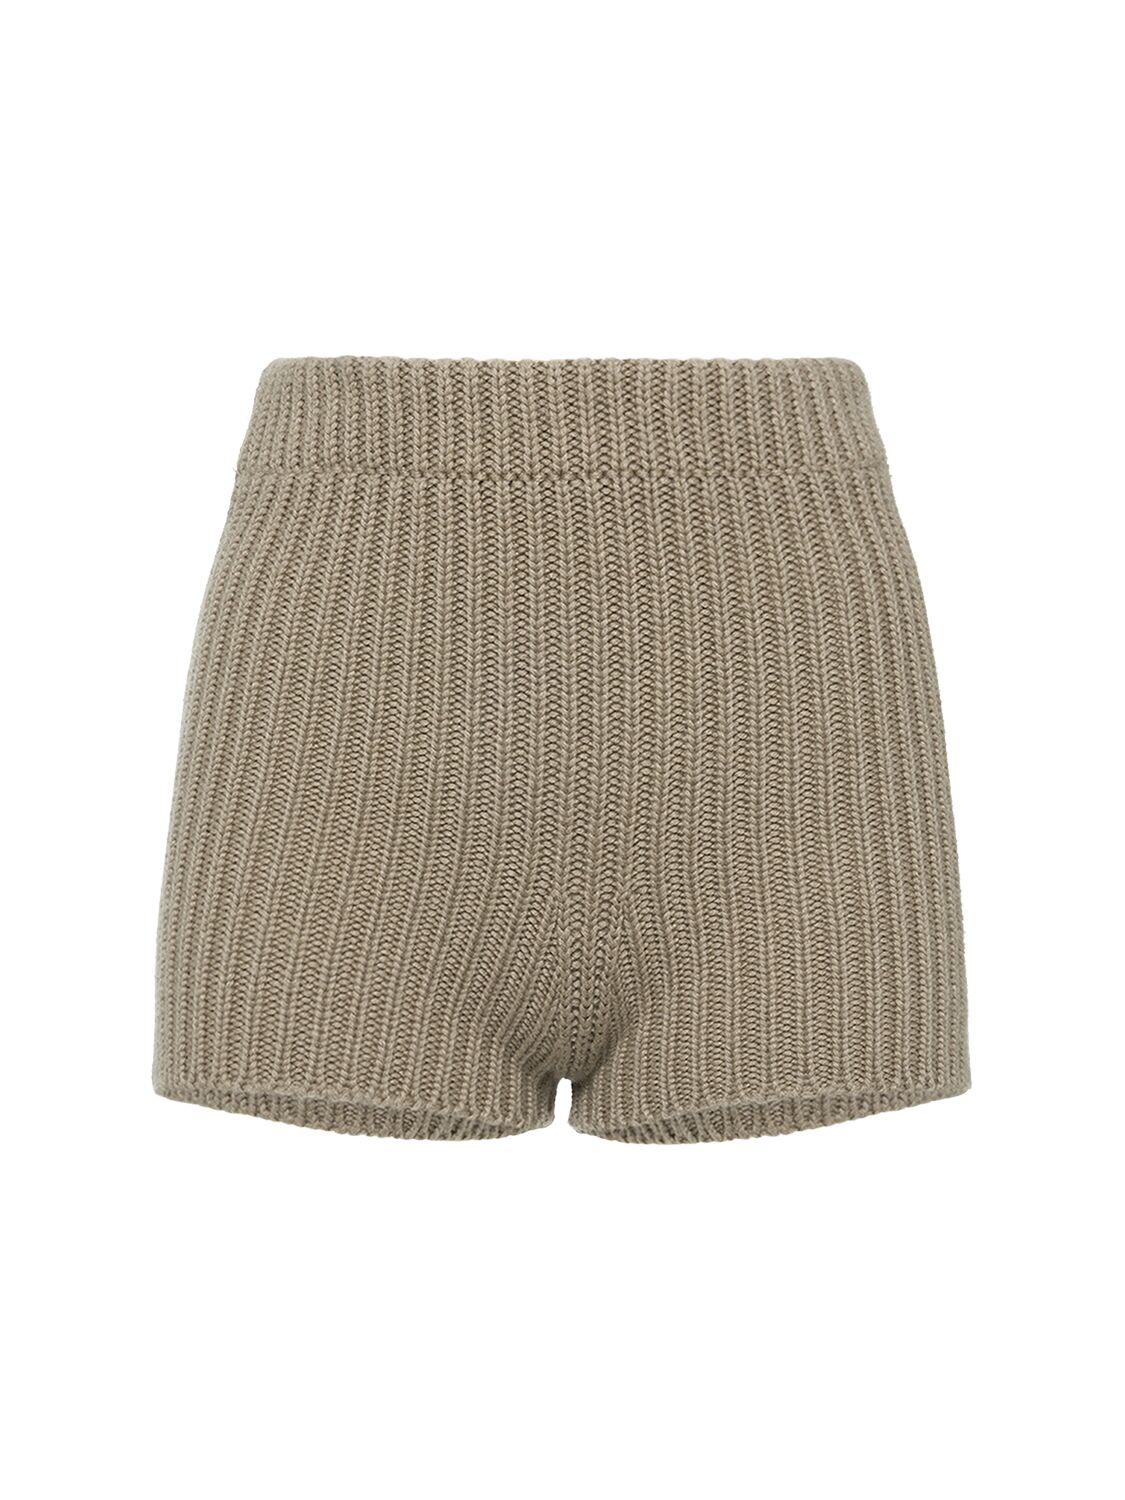 Max Mara Acceso1234 Cotton Rib Knit Shorts In Khaki